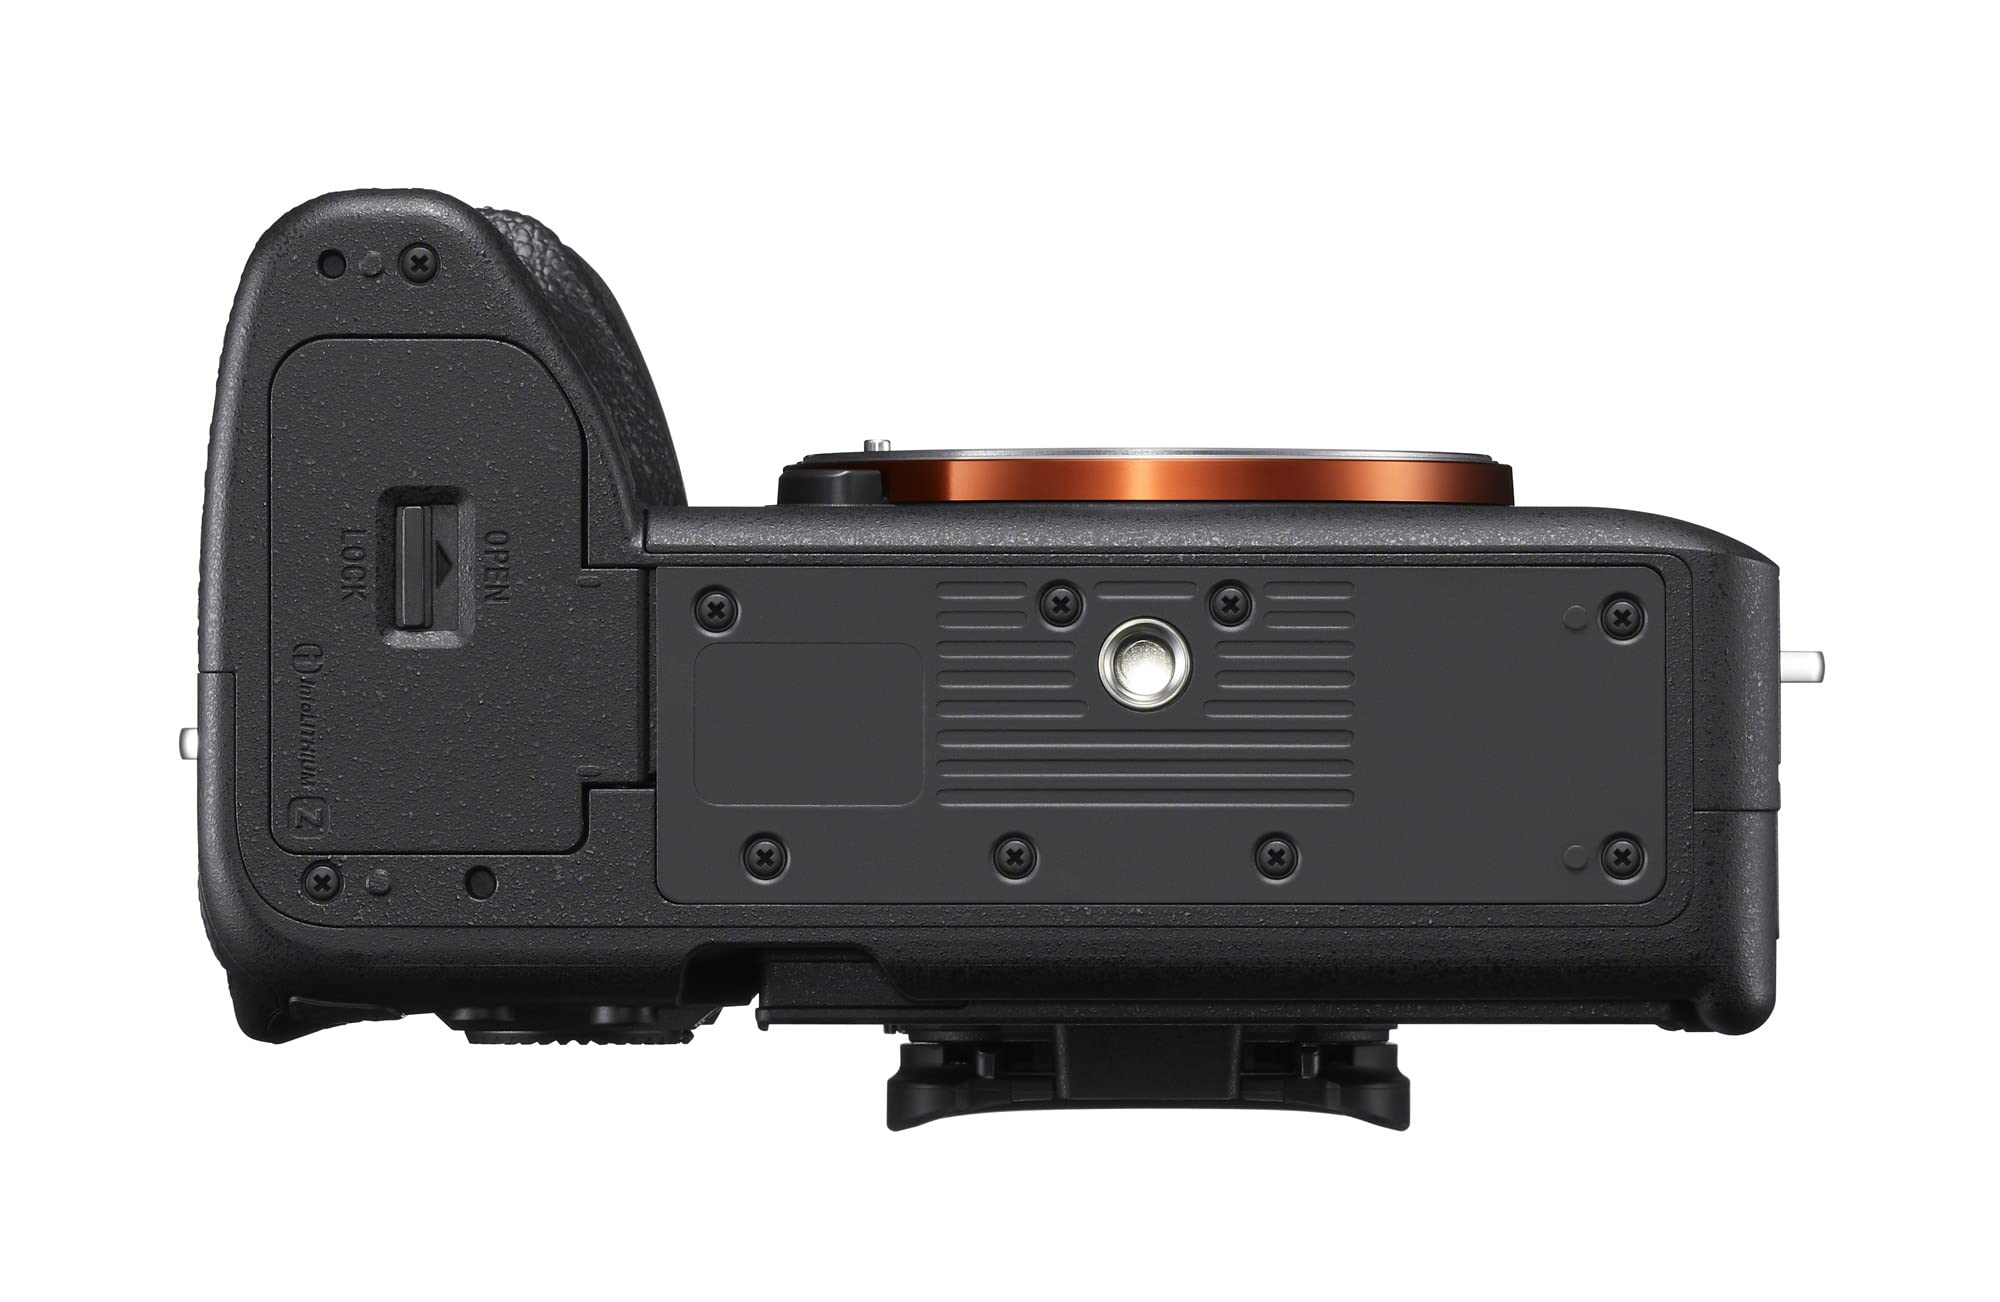 Sony Alpha 7 IV Full-frame Mirrorless Interchangeable Lens Camera,Body Only , Black